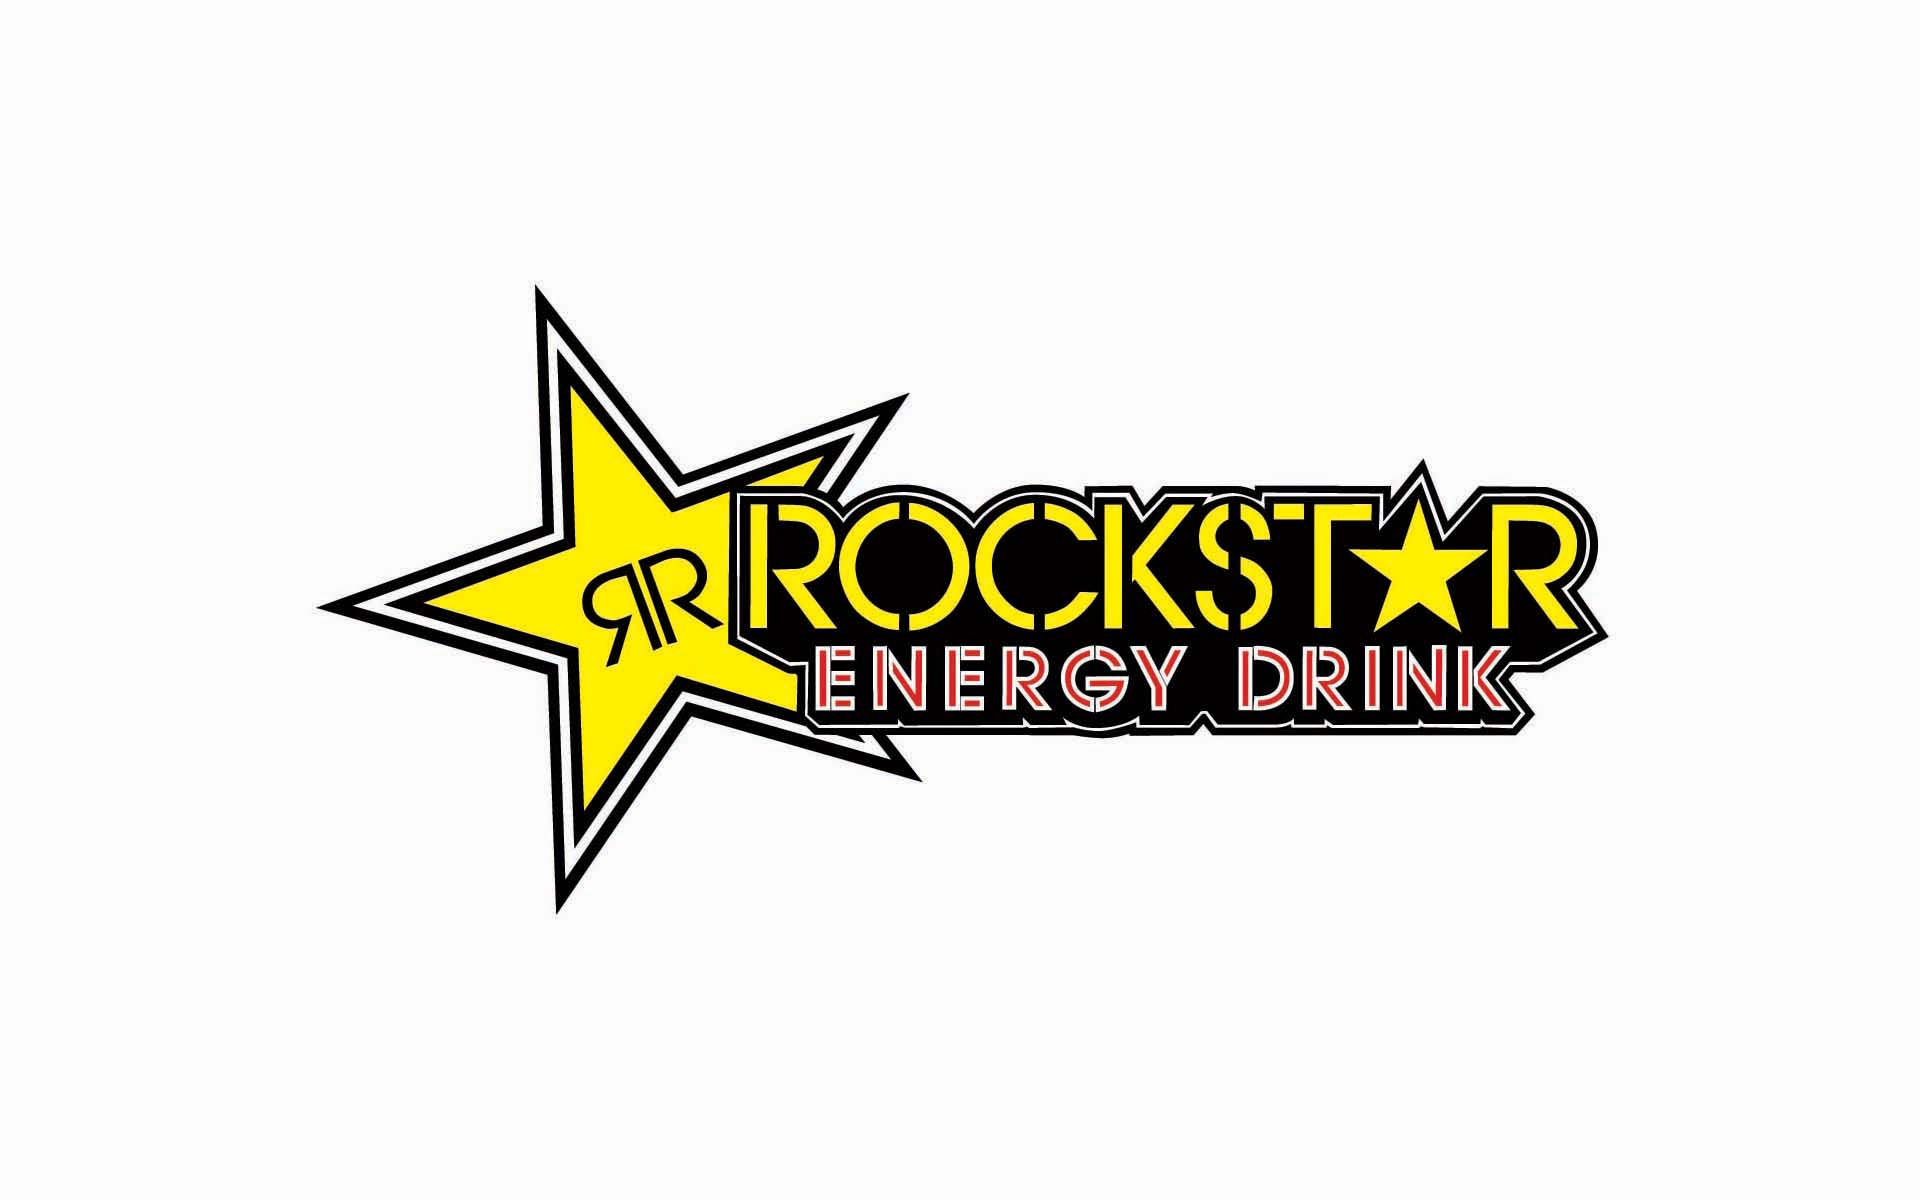 rockstar energy logo wallpaper hd